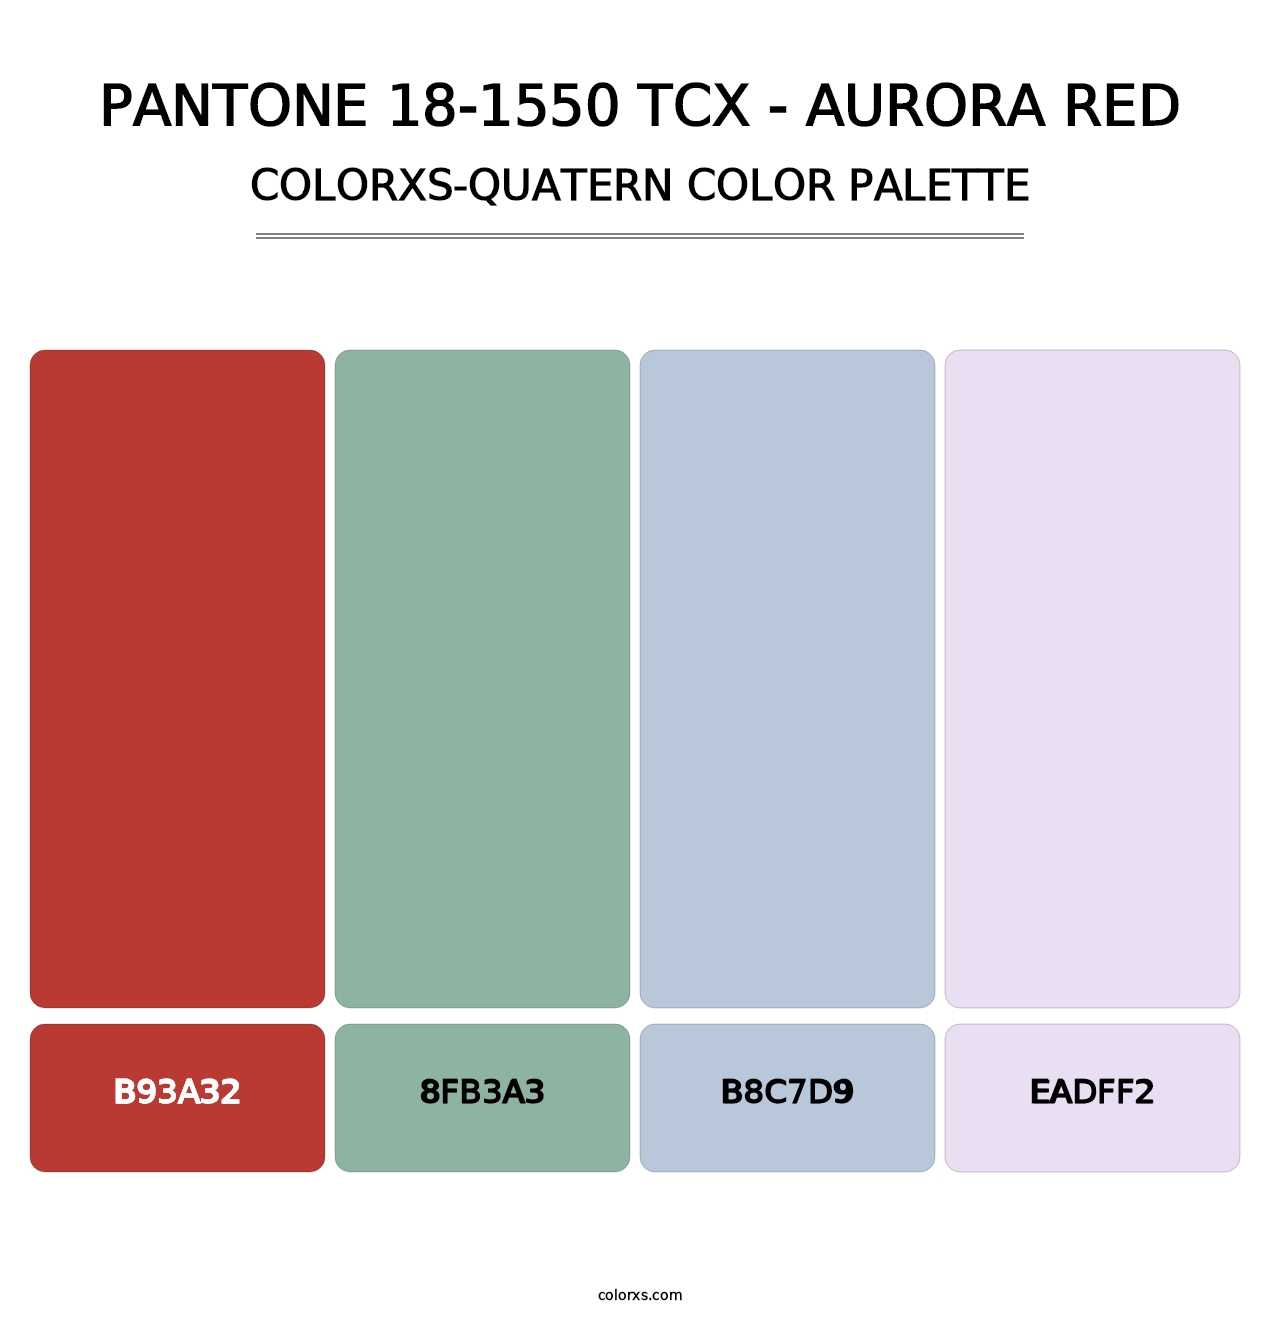 PANTONE 18-1550 TCX - Aurora Red - Colorxs Quatern Palette